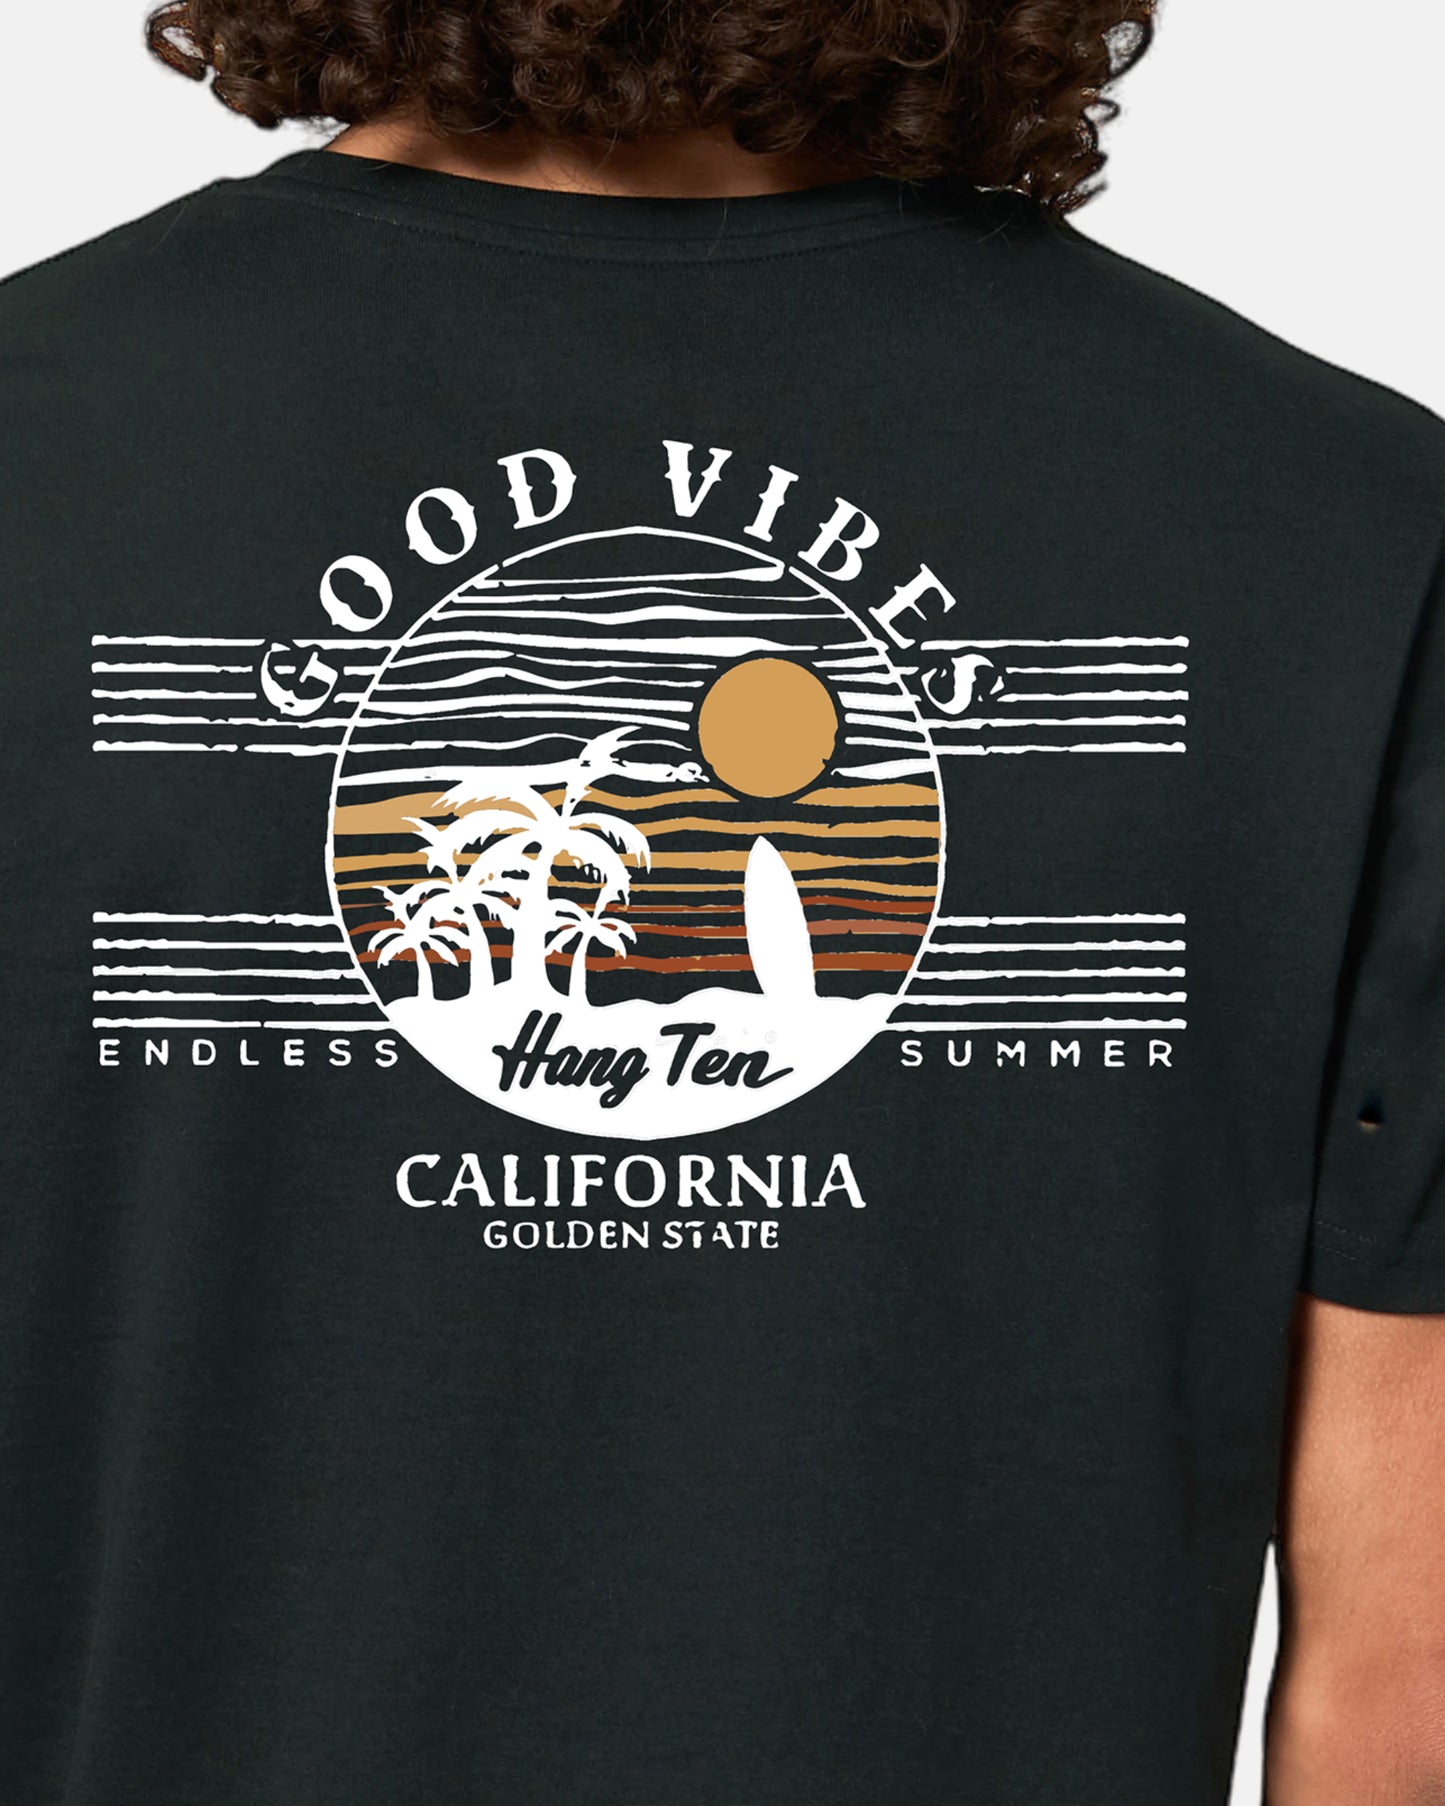 Hang Ten Good Vibes T-shirt - Black